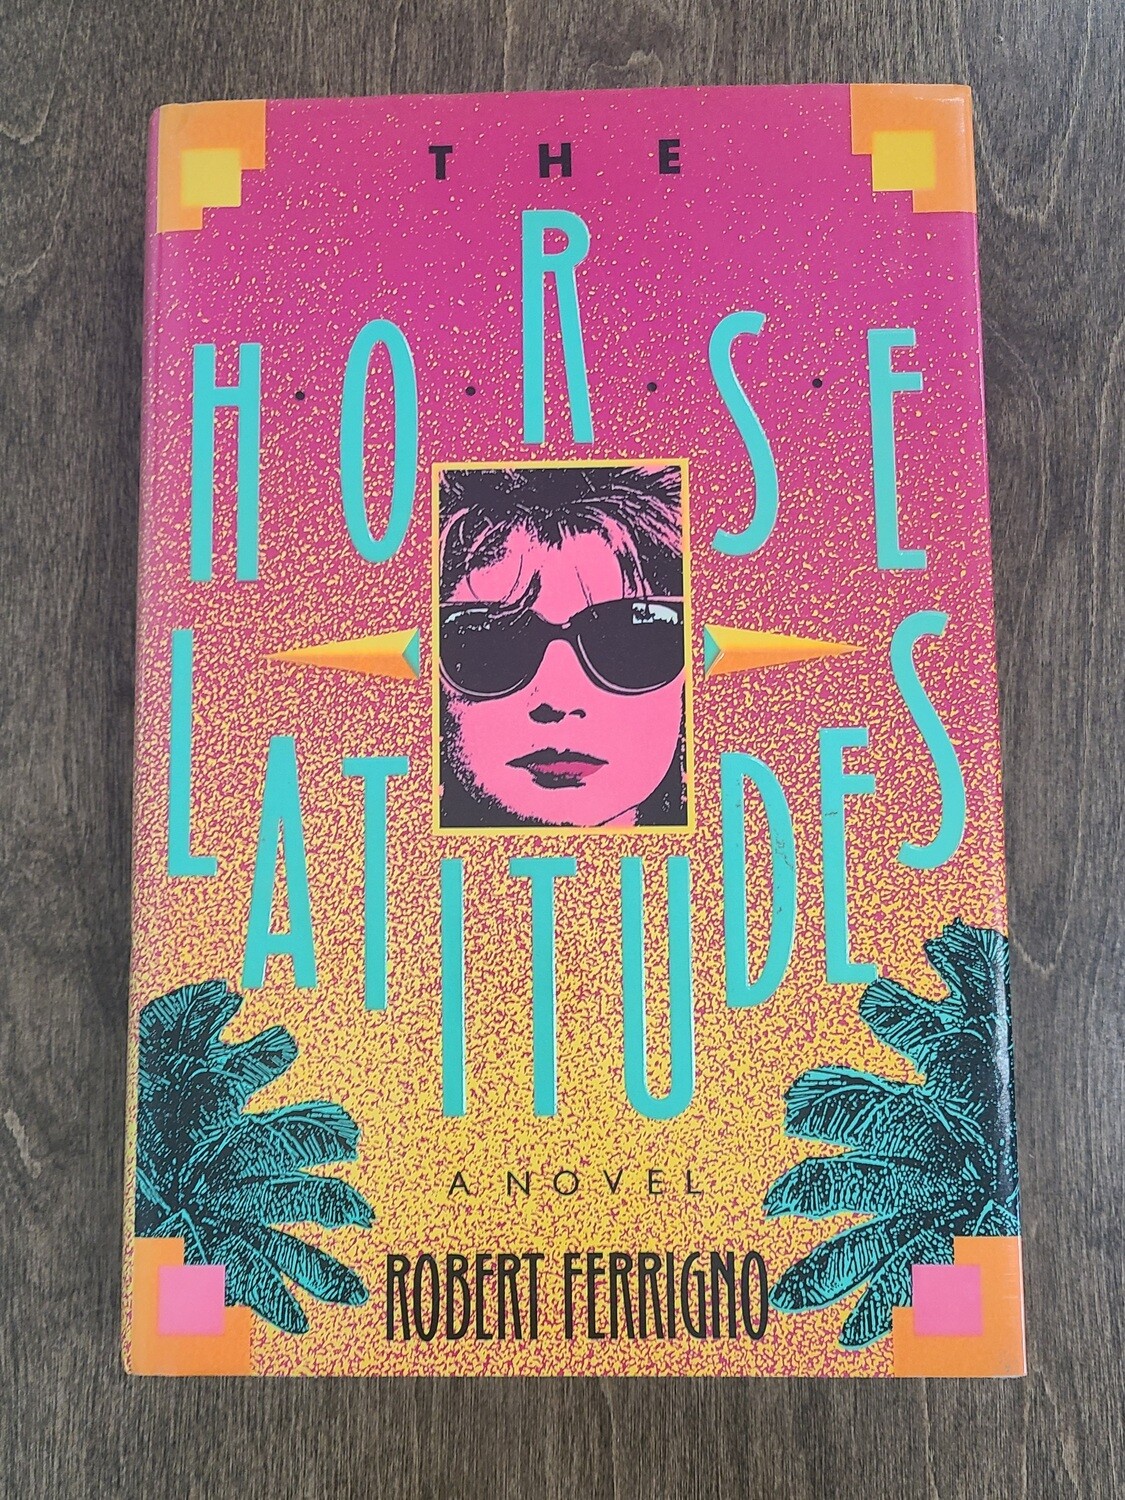 The Horse Latitudes by Robert Ferrigno